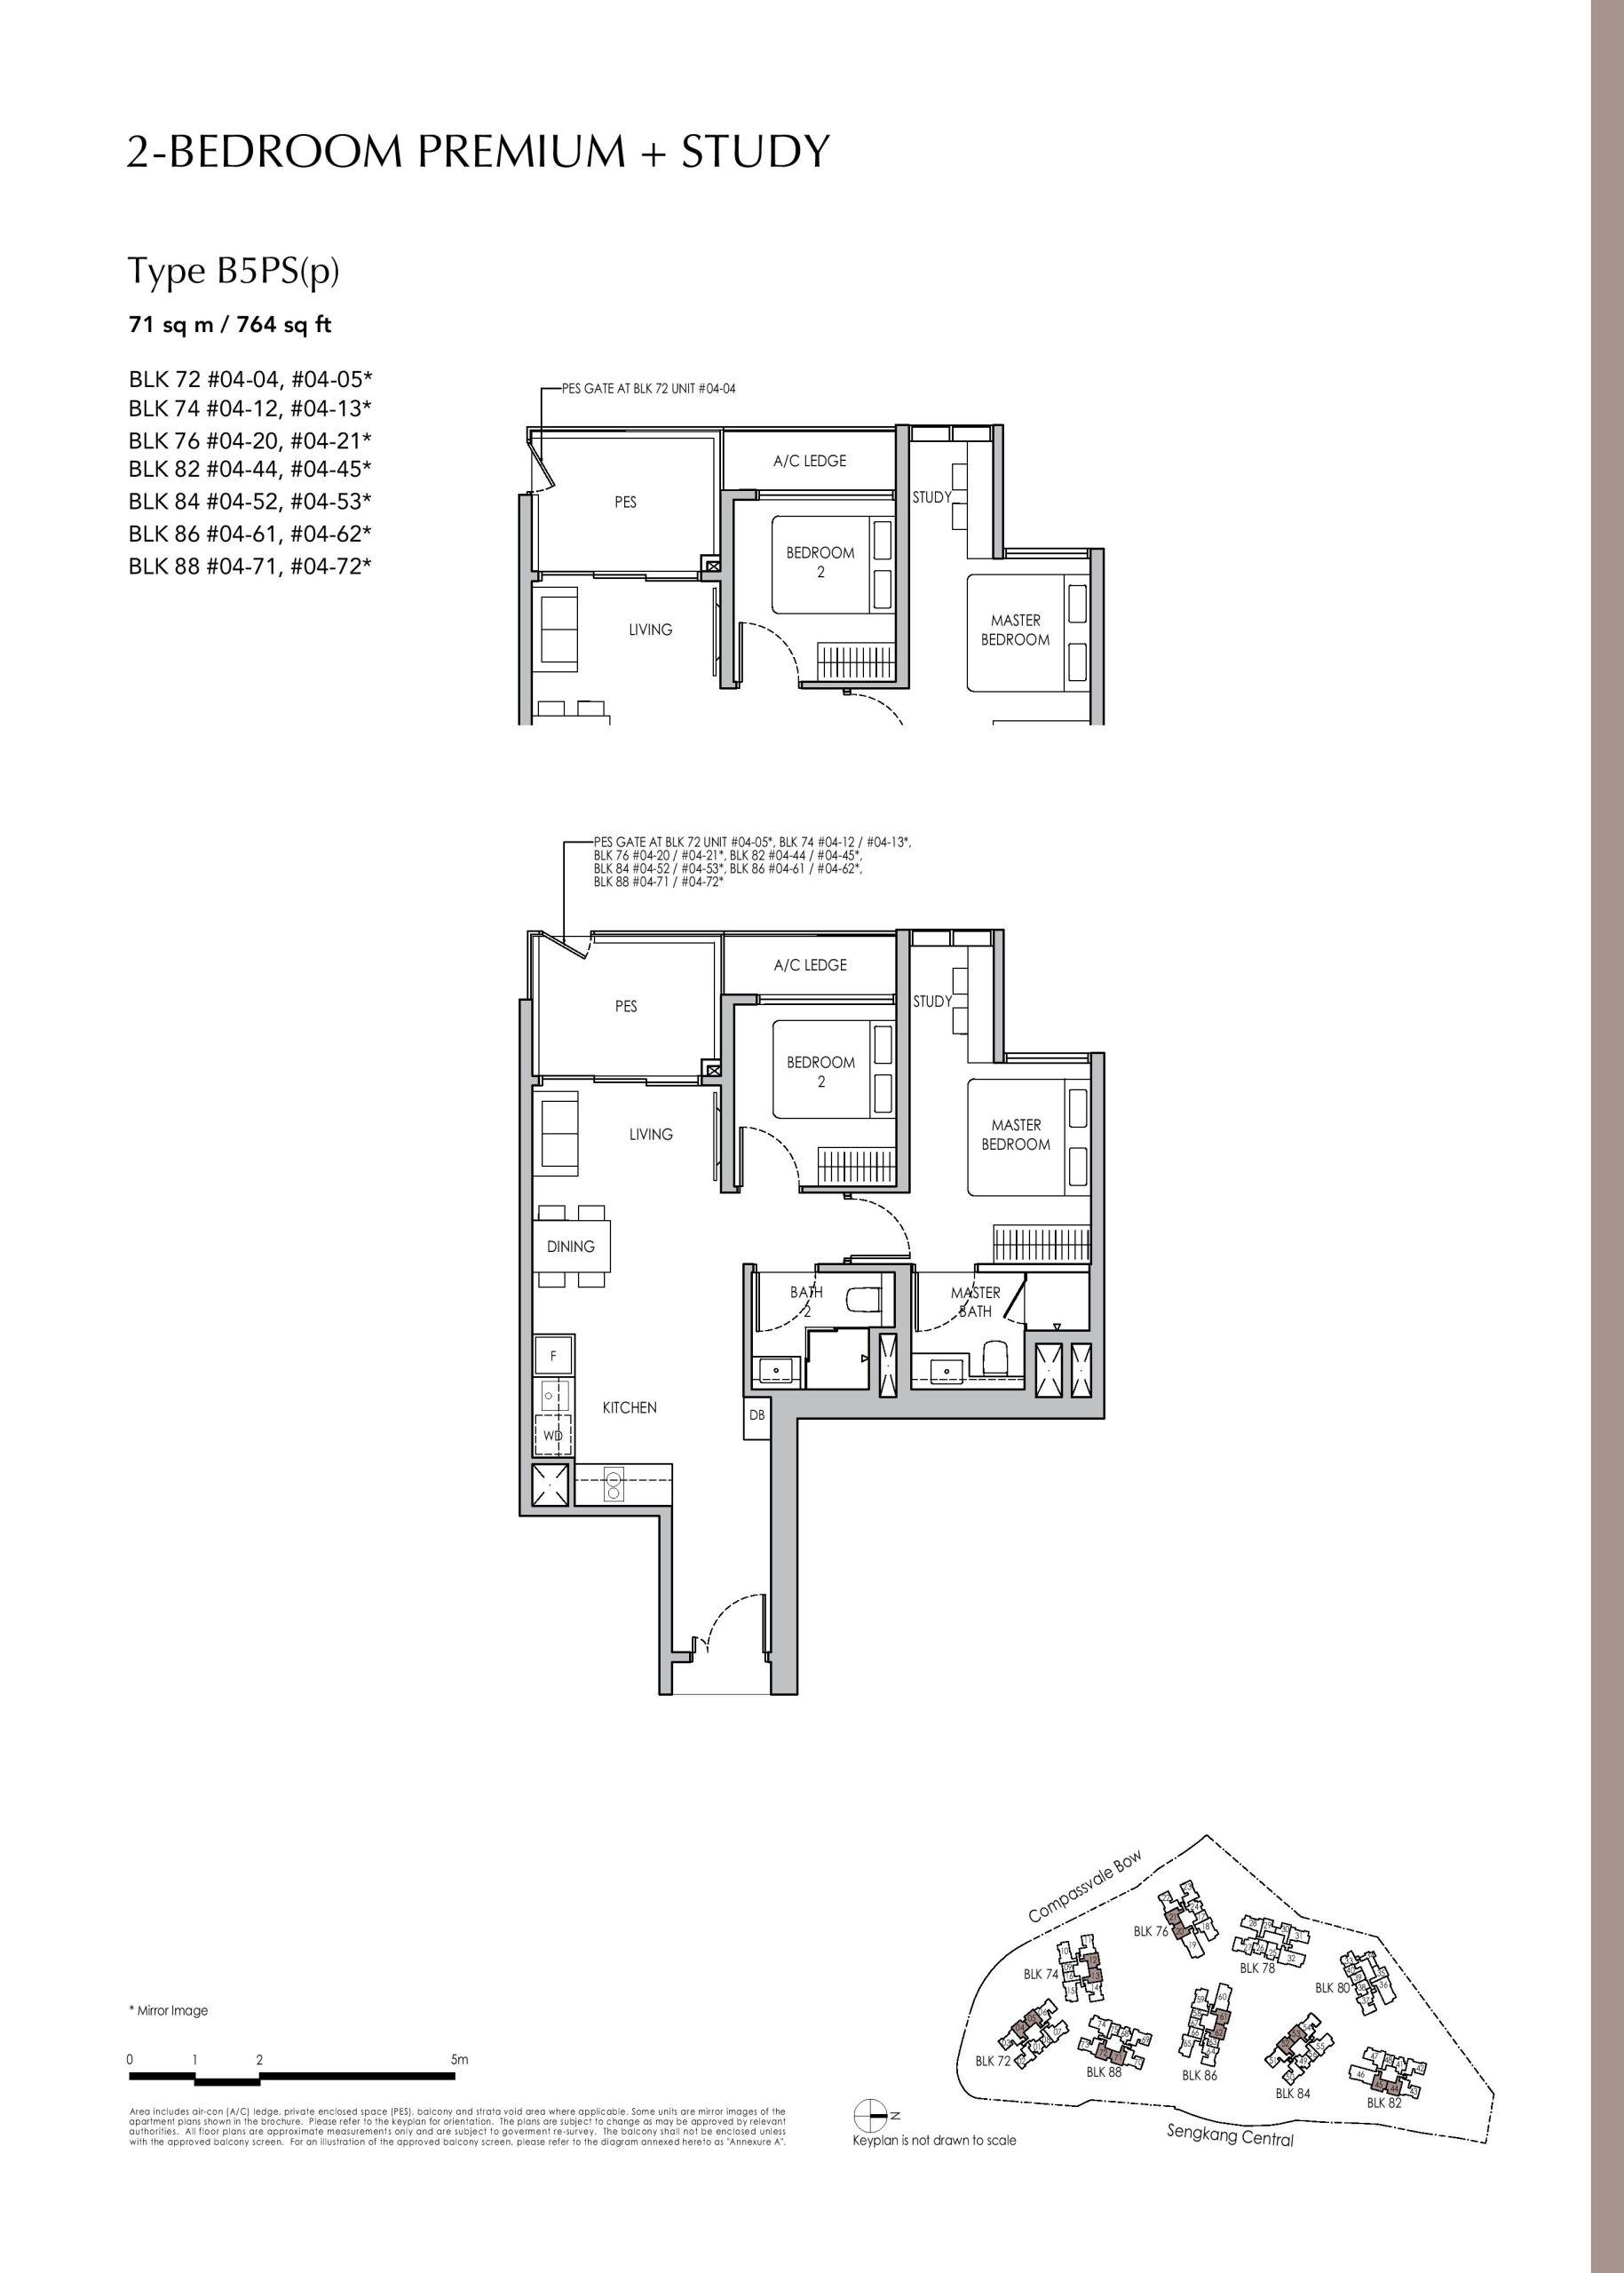 Sengkang Grand Residences 2 Bedroom Premium + Study Type B5PS(p) Floor Plans